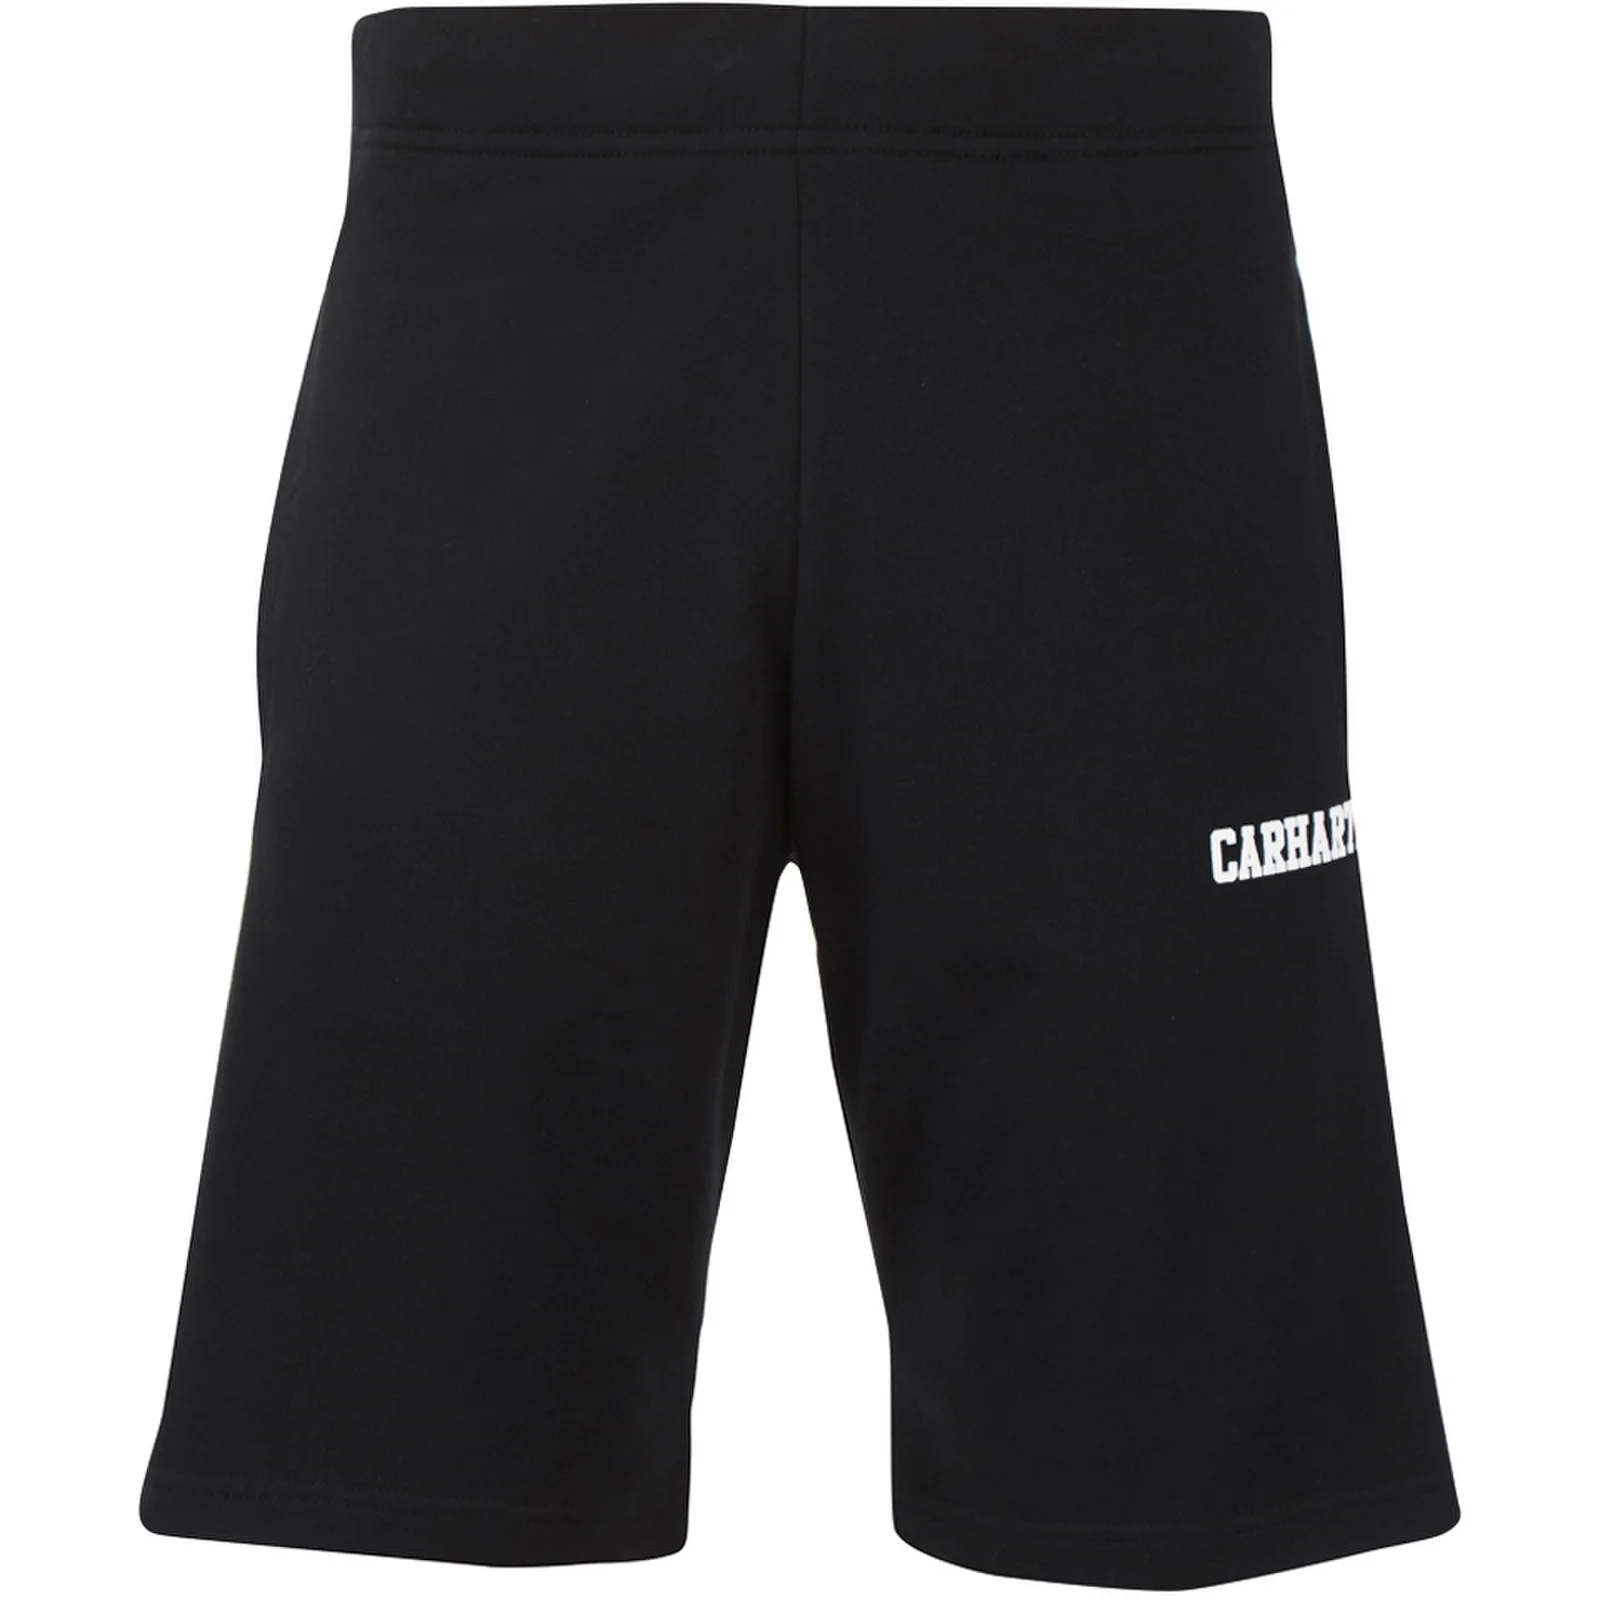 Carhartt Men's College Sweat Shorts - Black/White Image 1